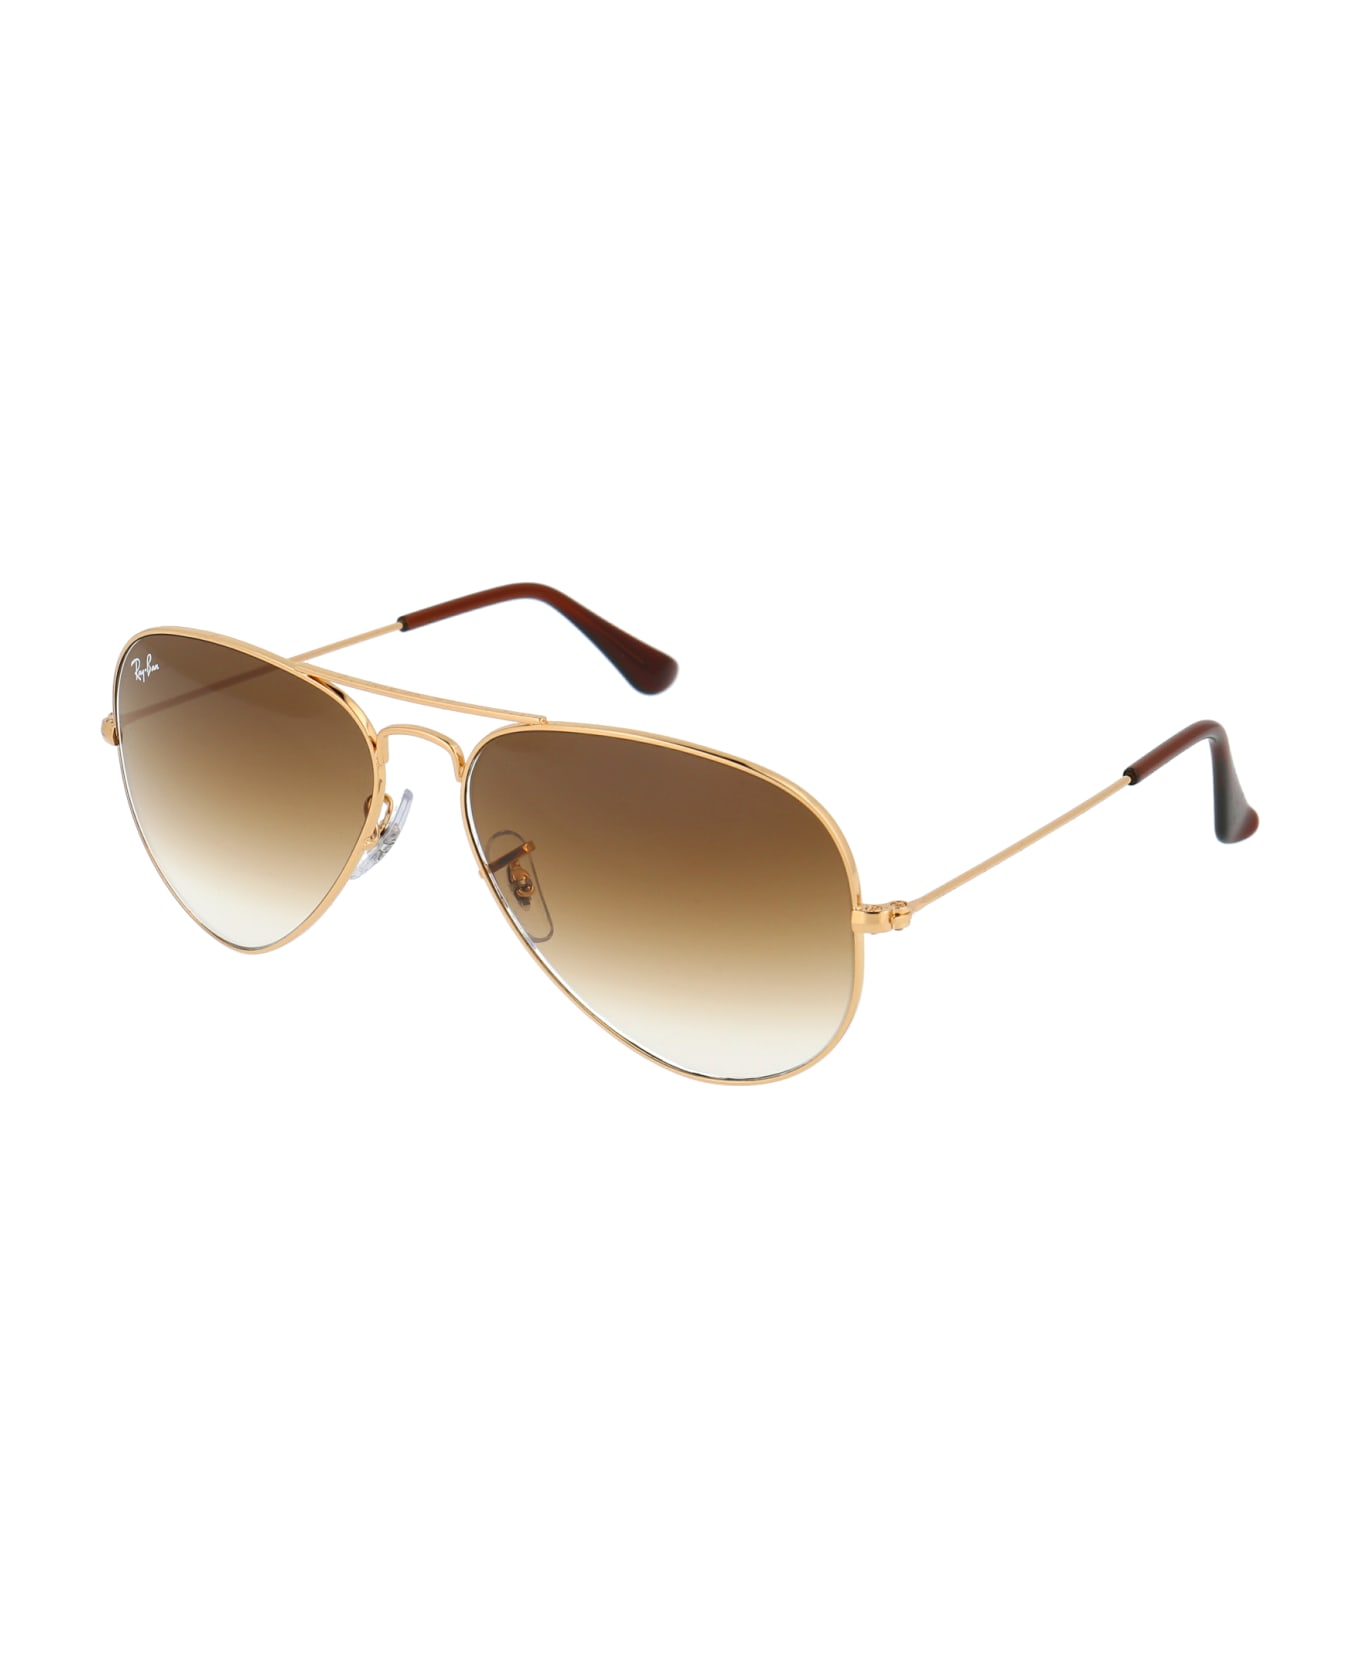 Ray-Ban Aviator Sunglasses - 001/51 GOLD